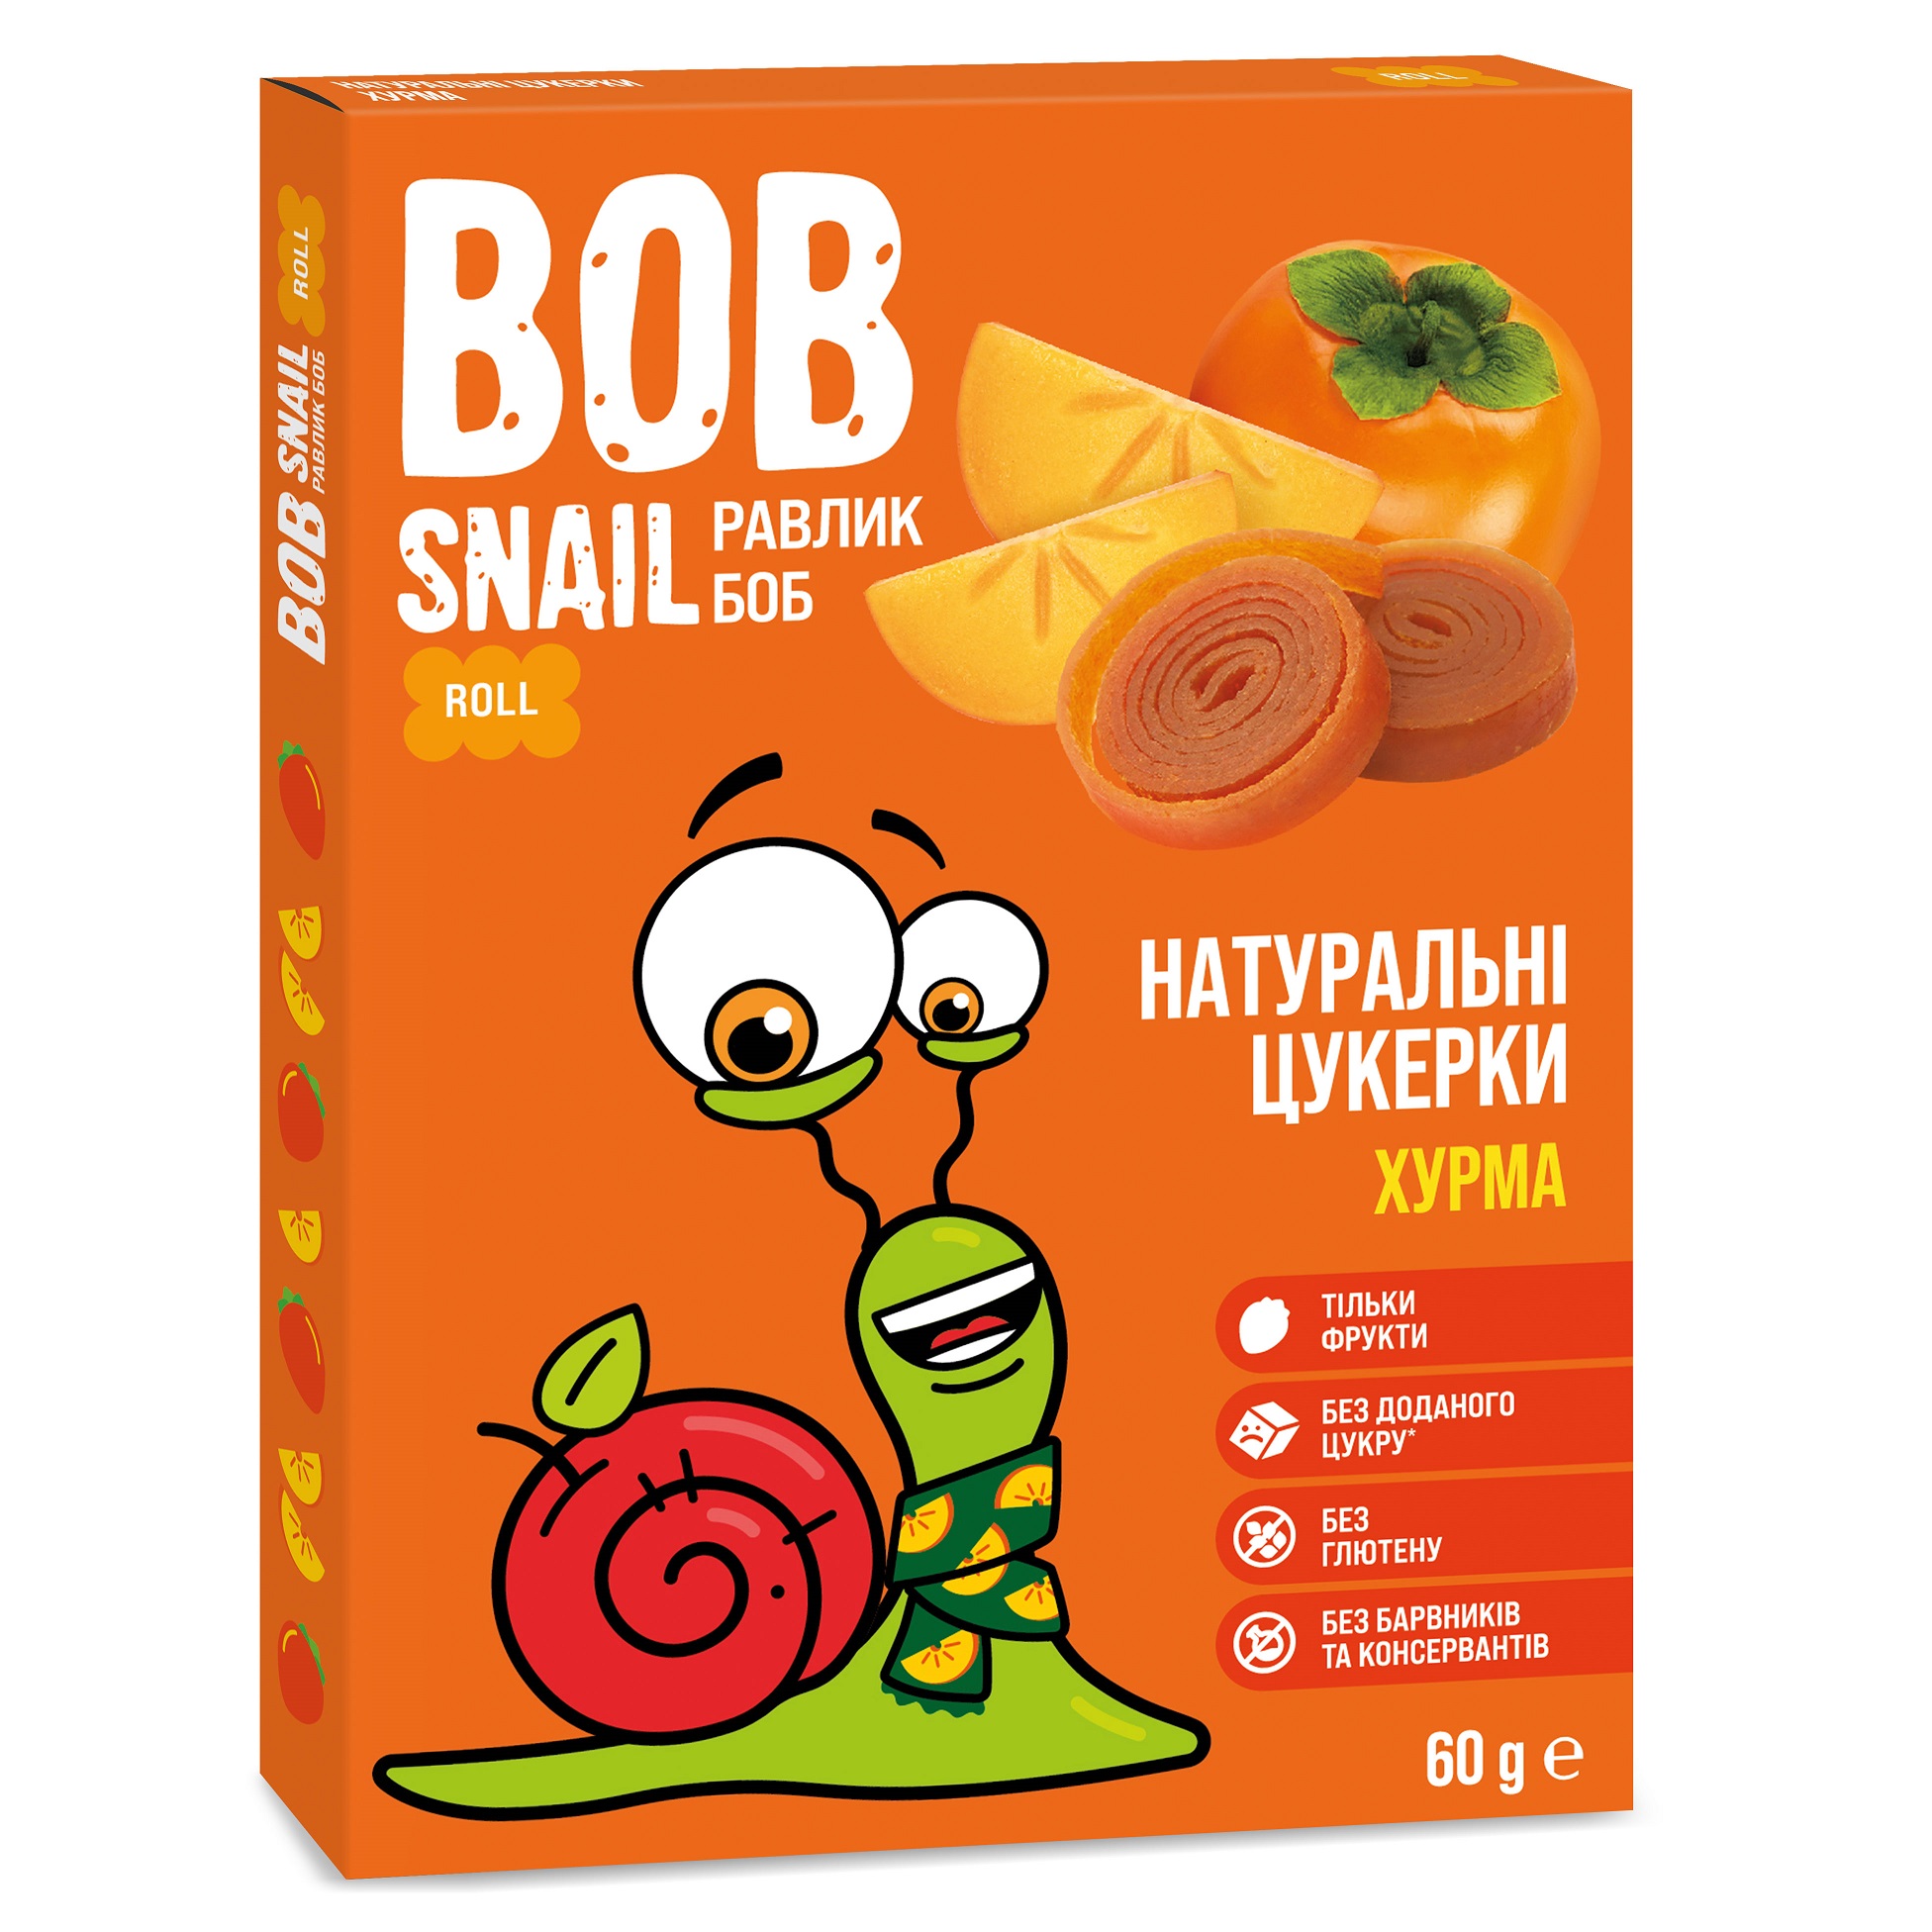 Натуральні цукерки Bob Snail Хурма, 60 г - фото 1